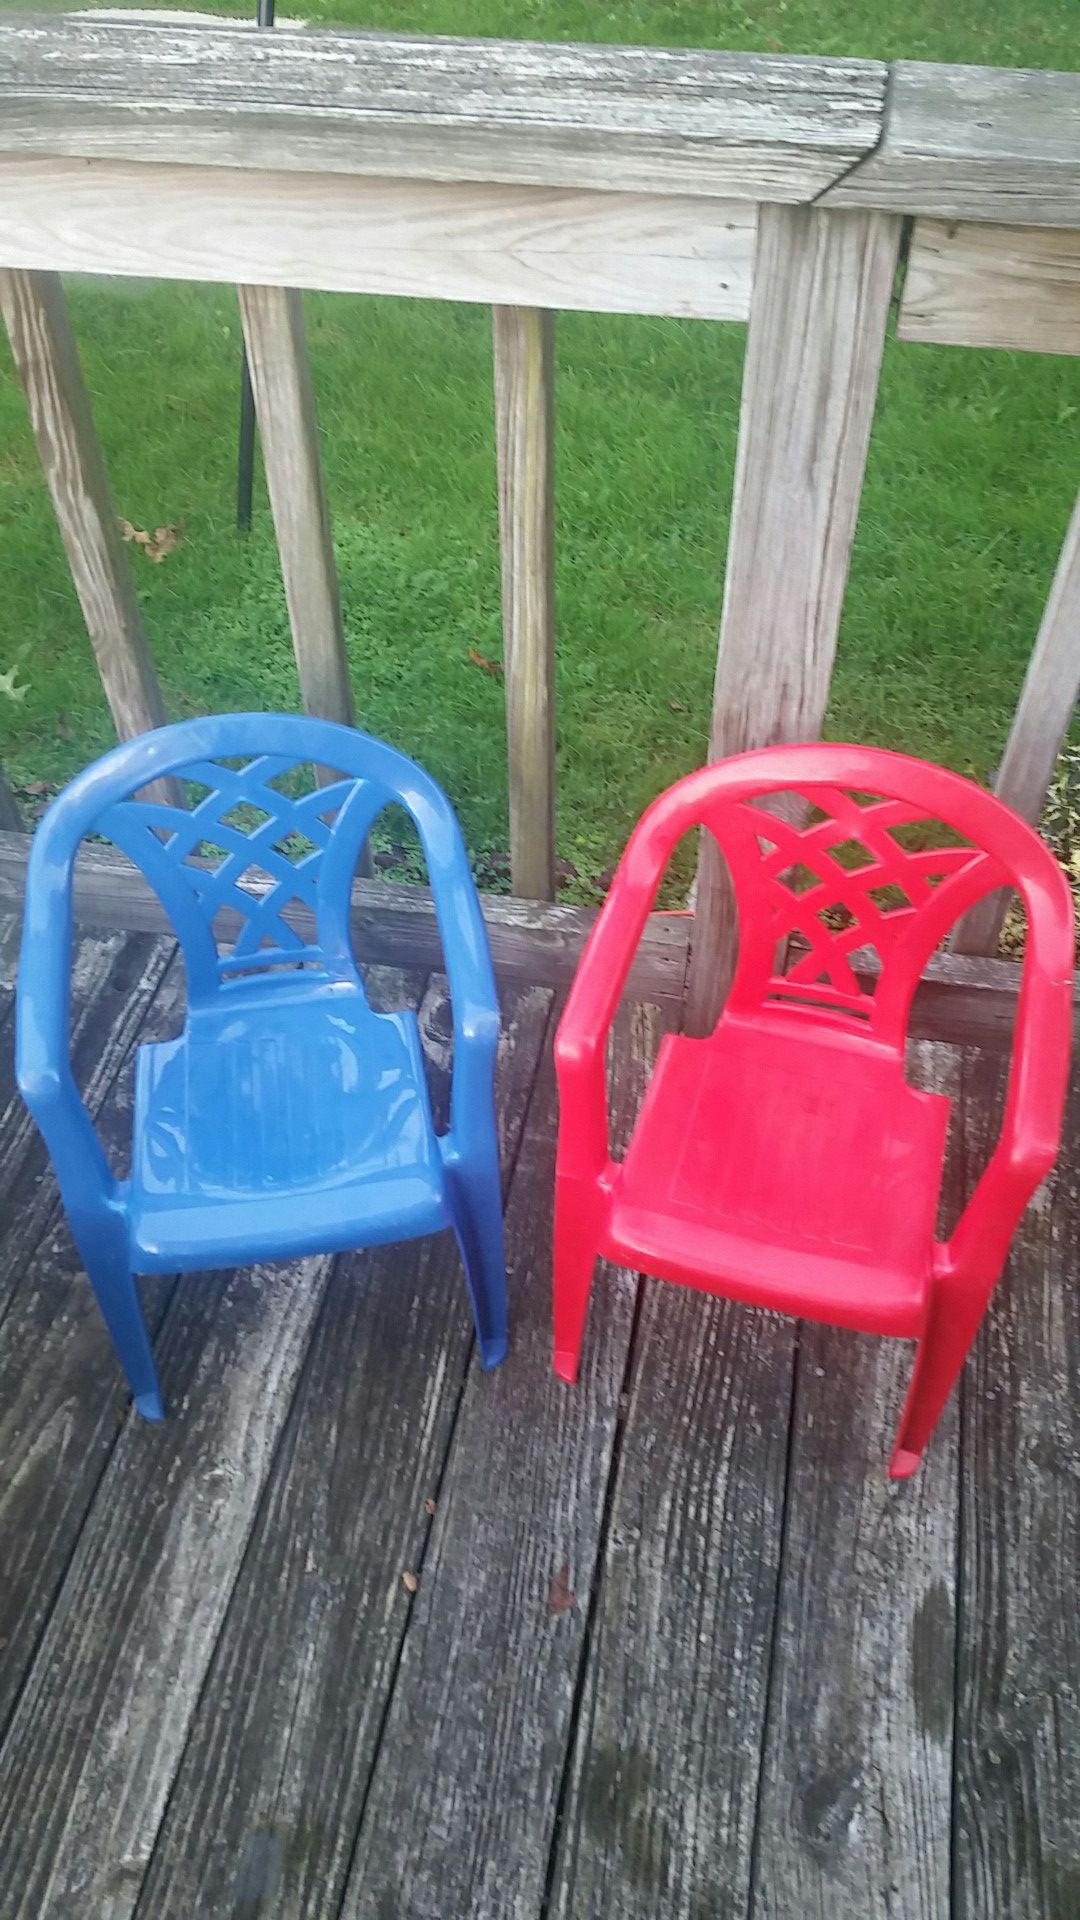 Kids plastic chairs